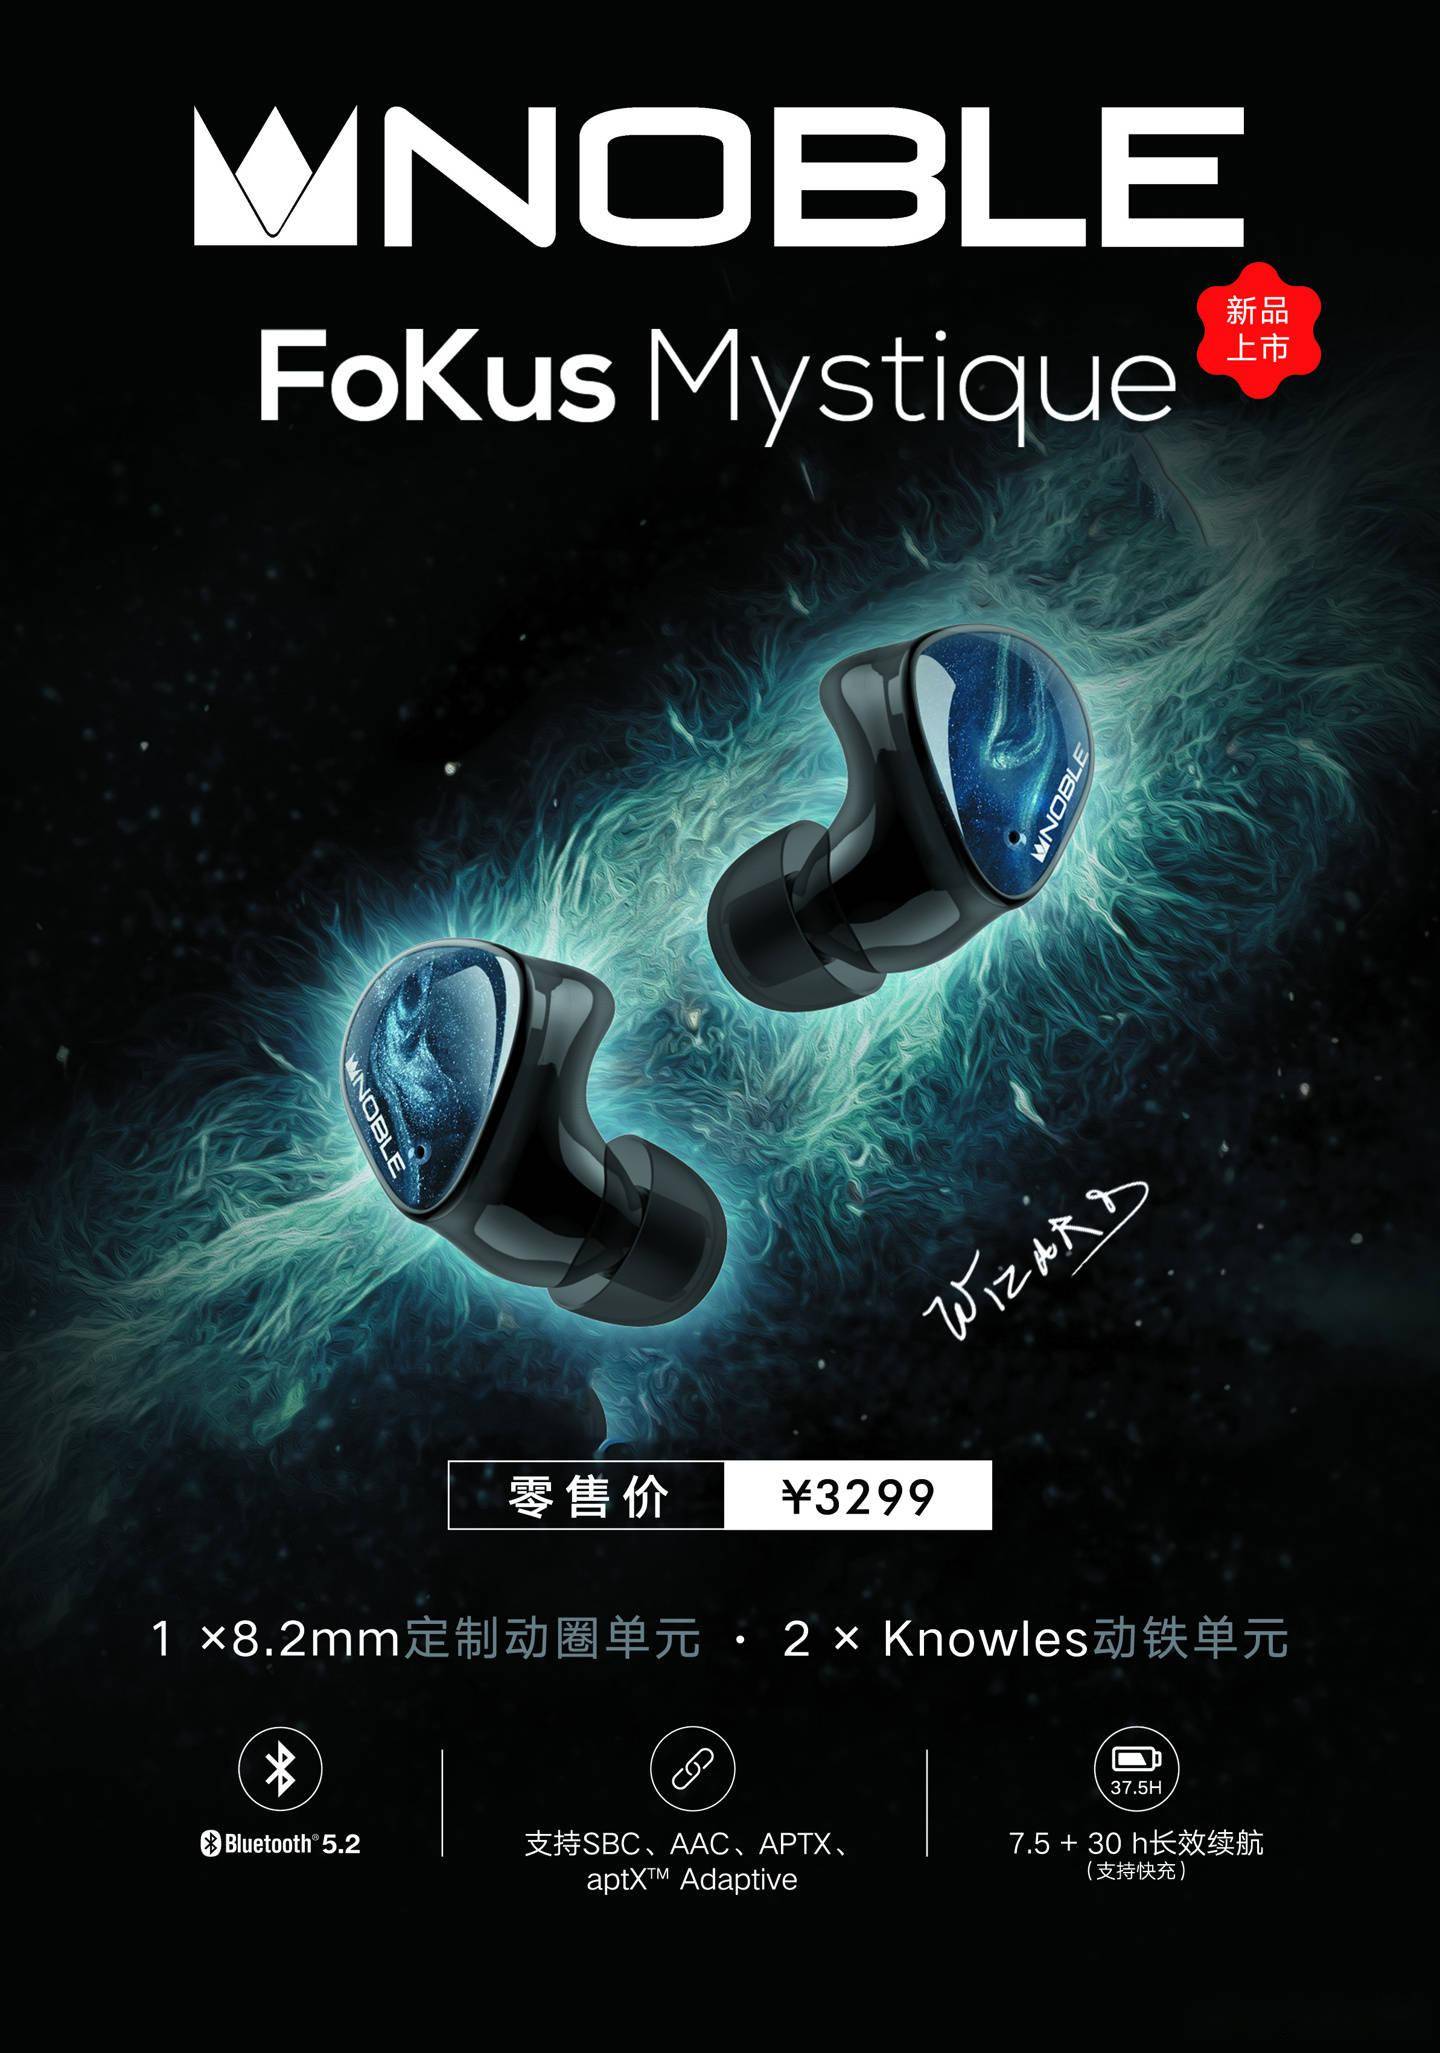 Noble Audio 推出 FoKus Pro 升级款真无线耳机FoKus Mystique 国外售价 359 美元-IT商业网-解读信息